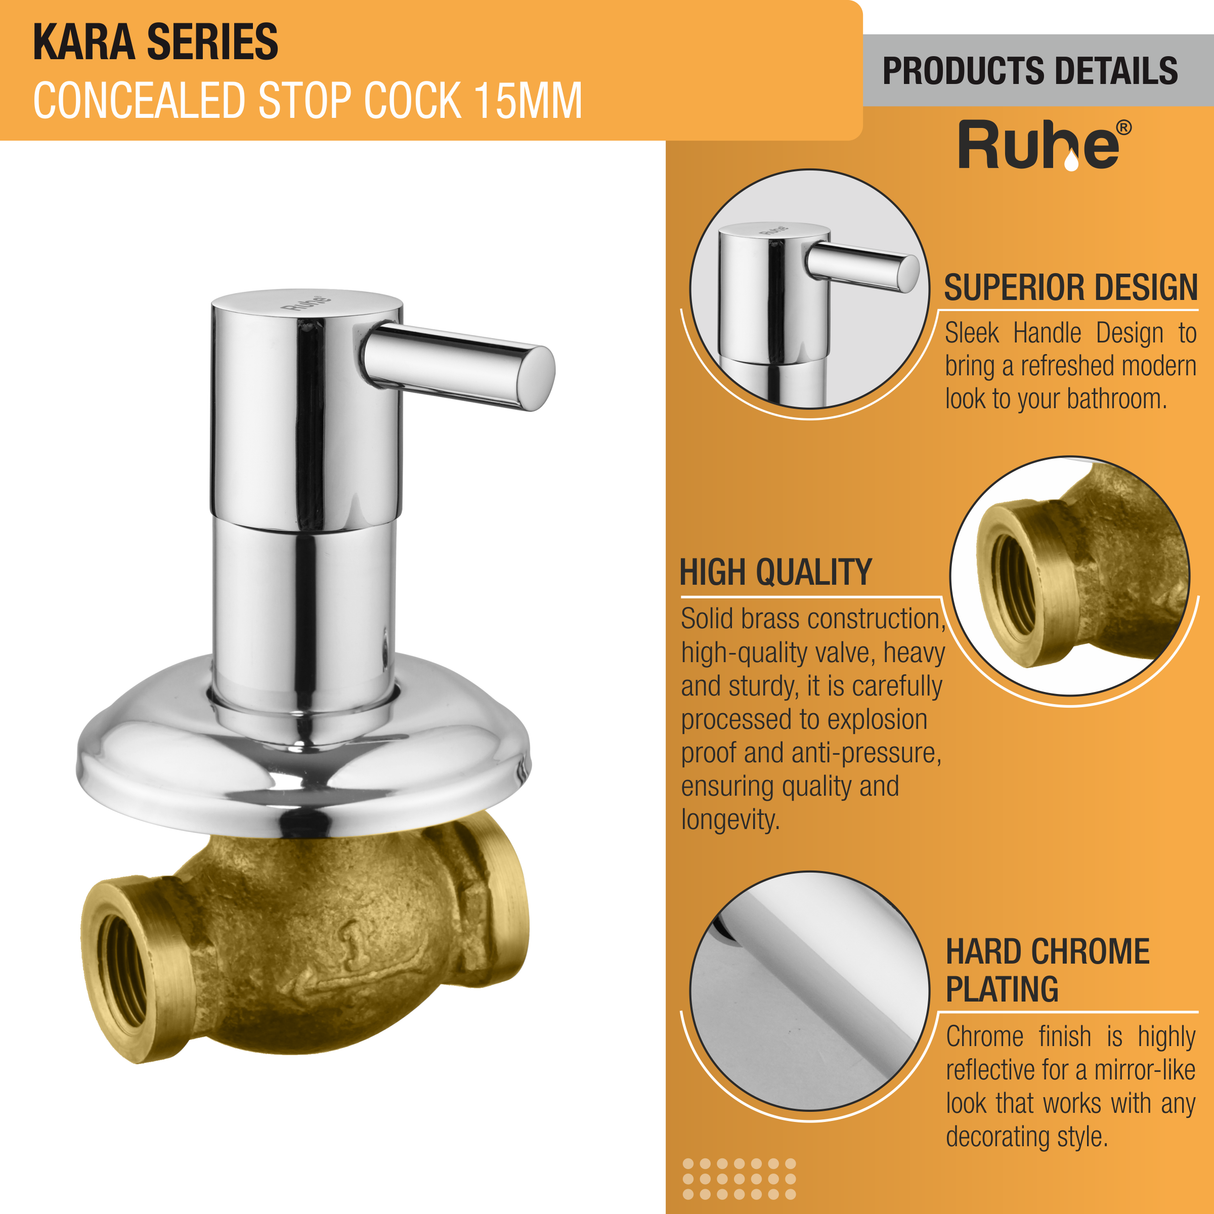 Kara Concealed Stop Valve Brass Faucet (15mm) product details